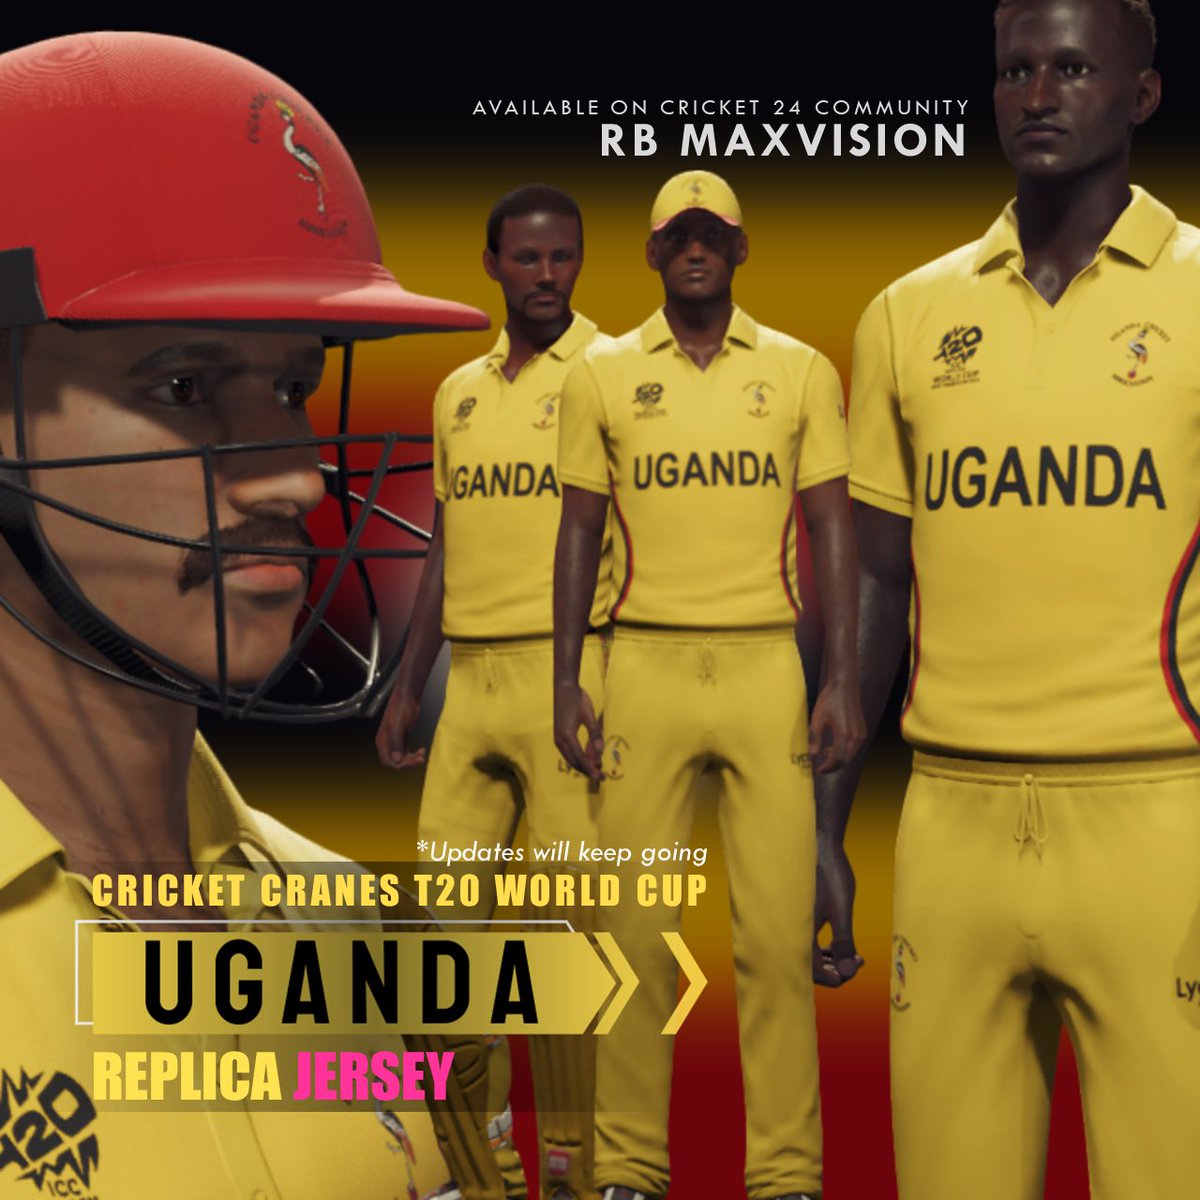 #Cricket24 | #UGANDA #NewT20WC Jersey 2024 | #CricketCranes Replica Jersey | Available on Cricket 24 Community | Academy name : RB MaxVision @AJMods99 @CricketUganda @ICC @T20WorldCup @LycaMobileForUK
#NewT20Jersey #NewJerseys #T20WorldCup2024 #UgandaJersey #Ajmods99 #CricketGame